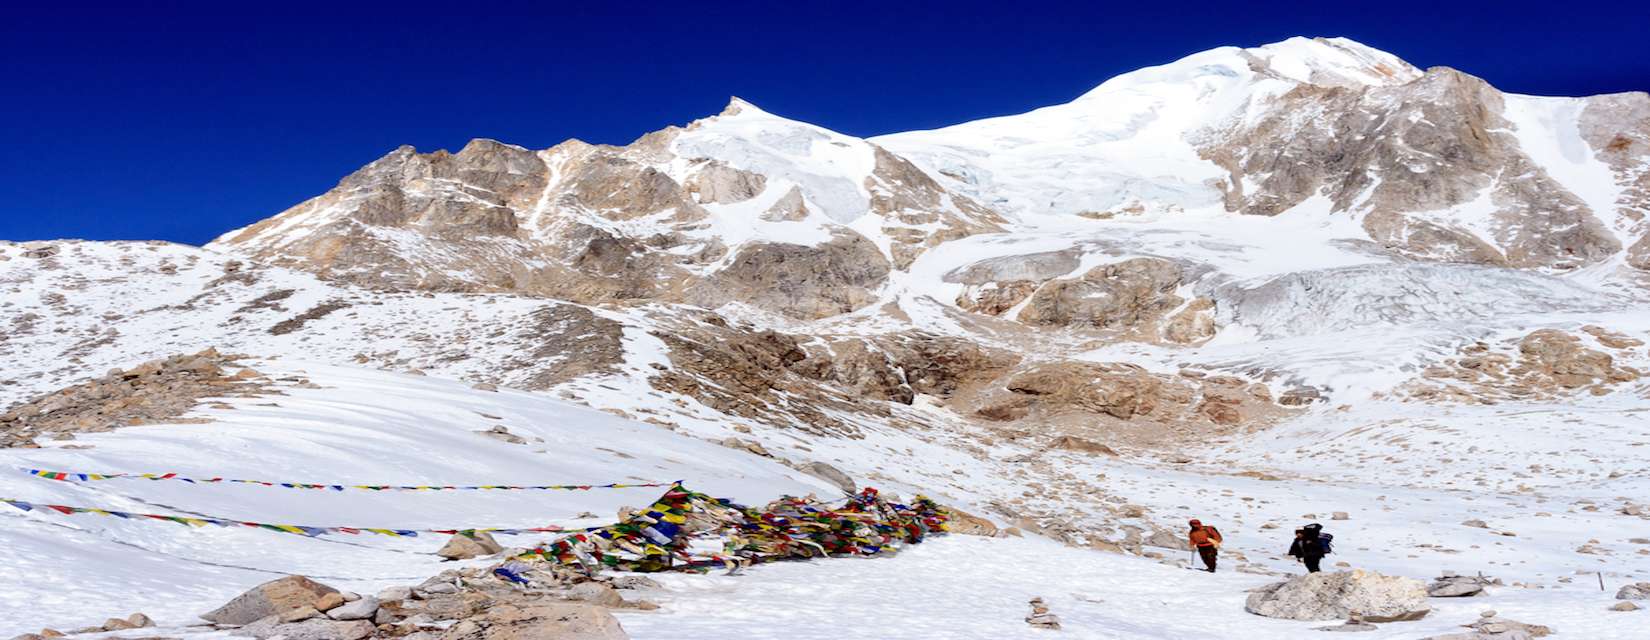 Manaslu circuit trek - Himalayan Frozen